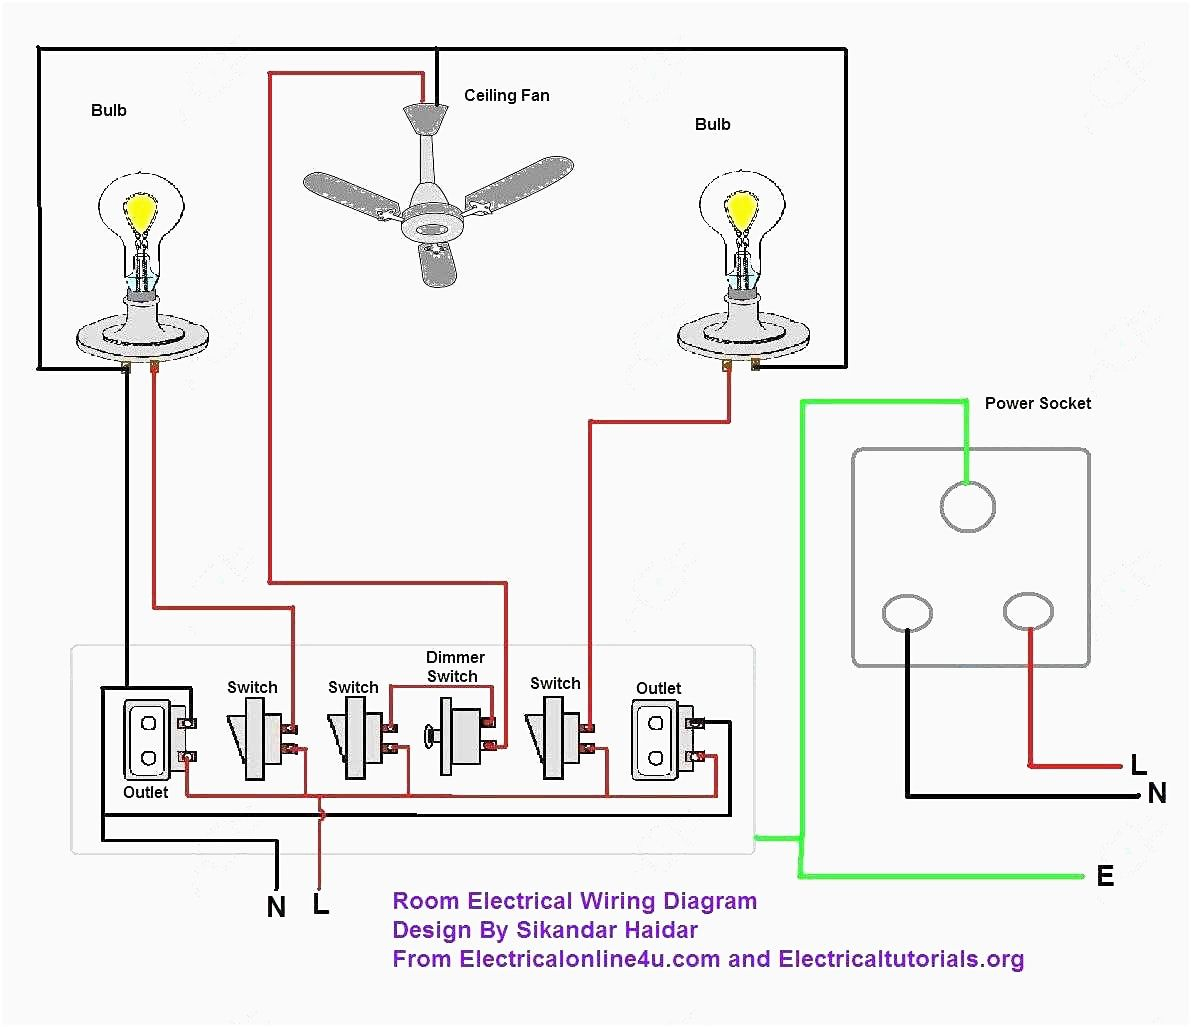 Ceiling Fan Wiring Diagram Wiring Schematics For Dummies Wiring Diagram Section